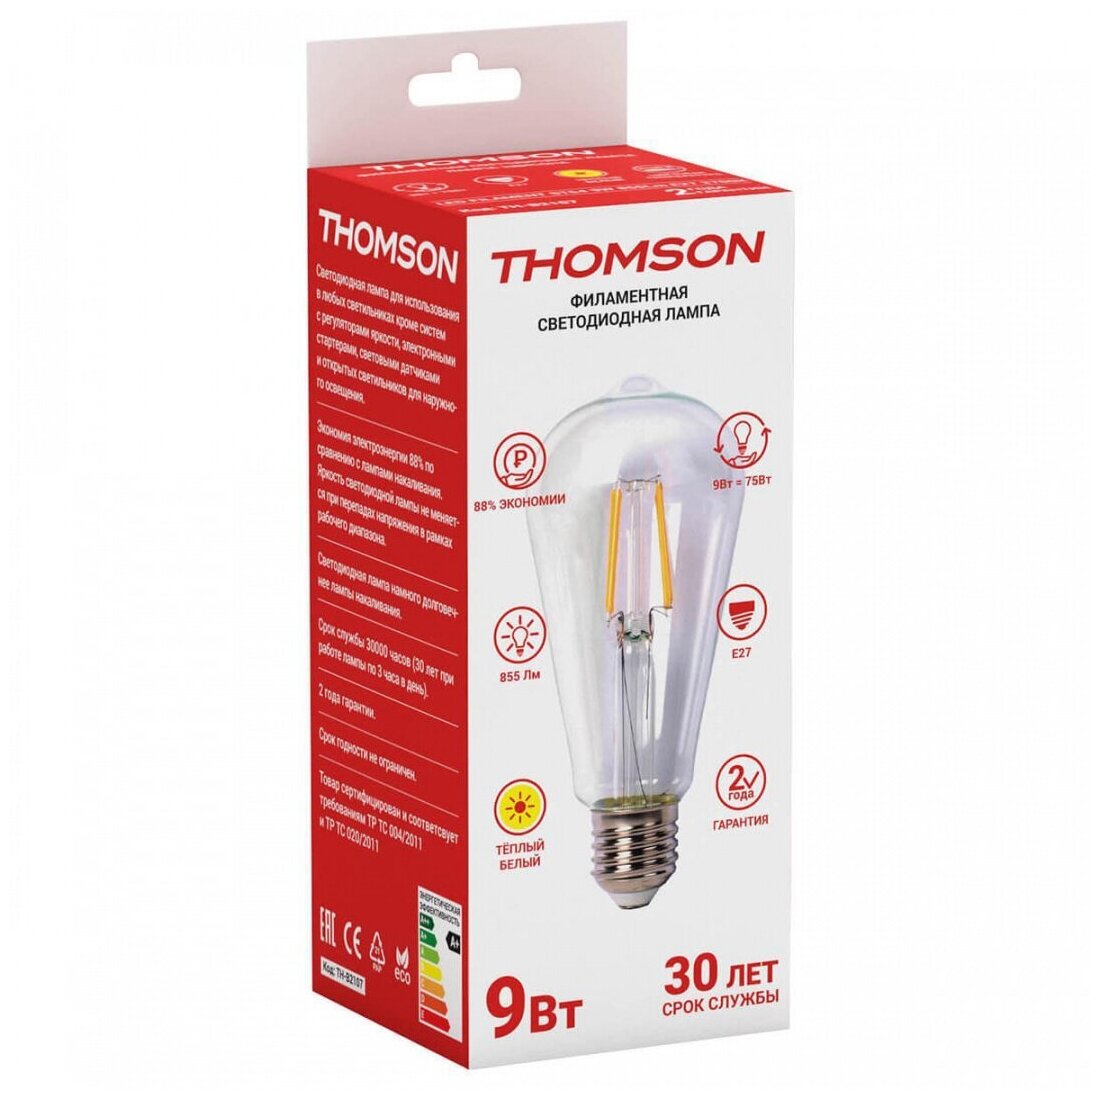 THOMSON LED FILAMENT ST64 7W 750Lm E27 6500K